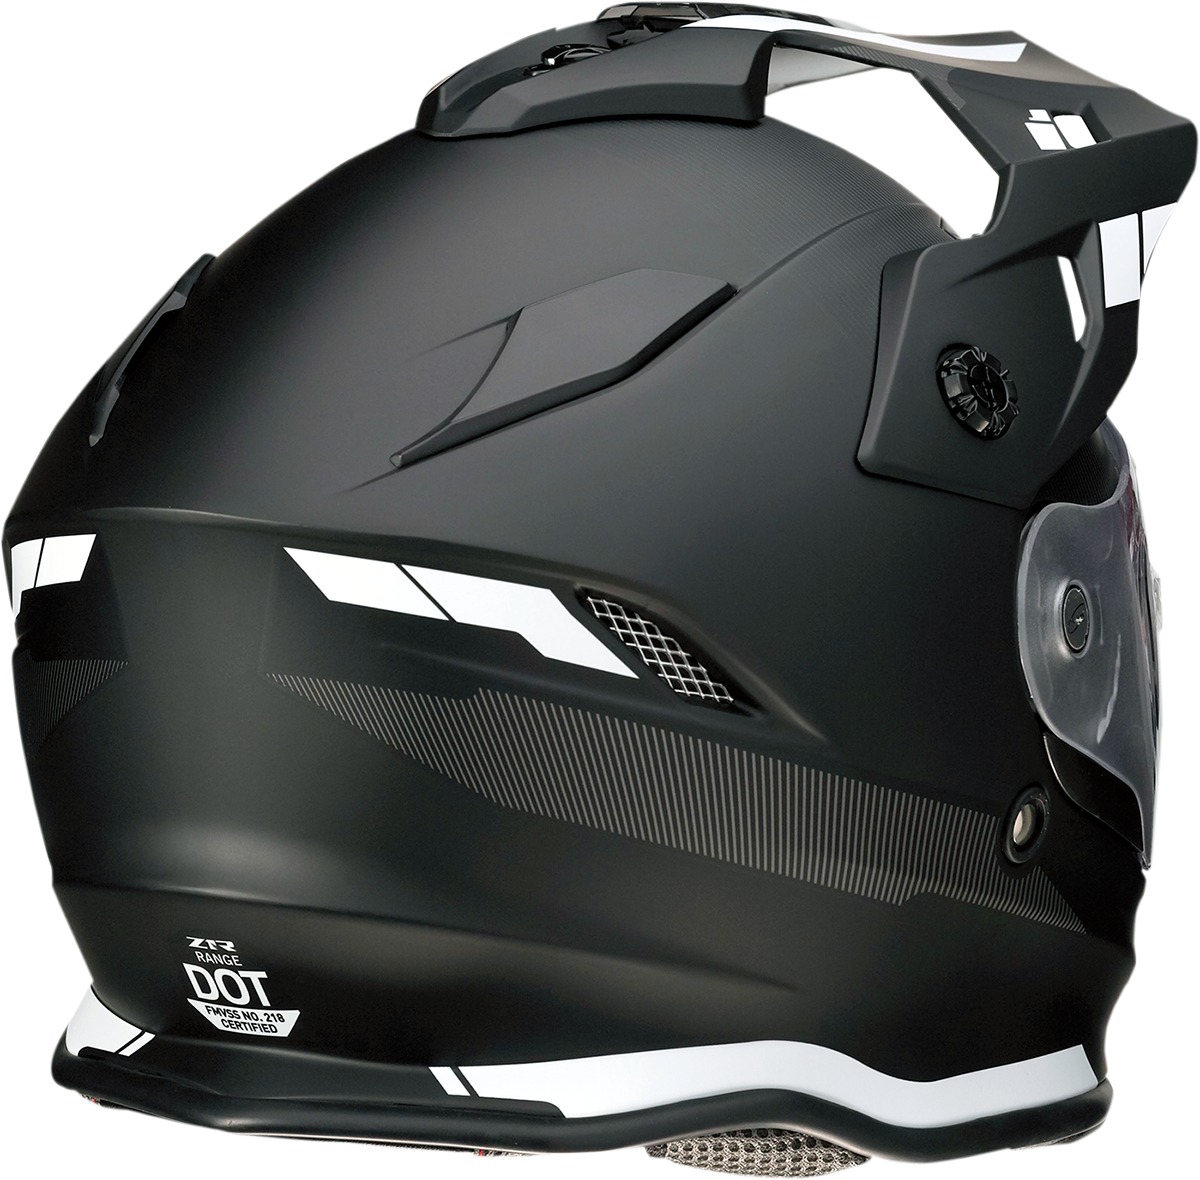 Range Dual Sport Helmet X-Small - Uptake Black/White - Click Image to Close